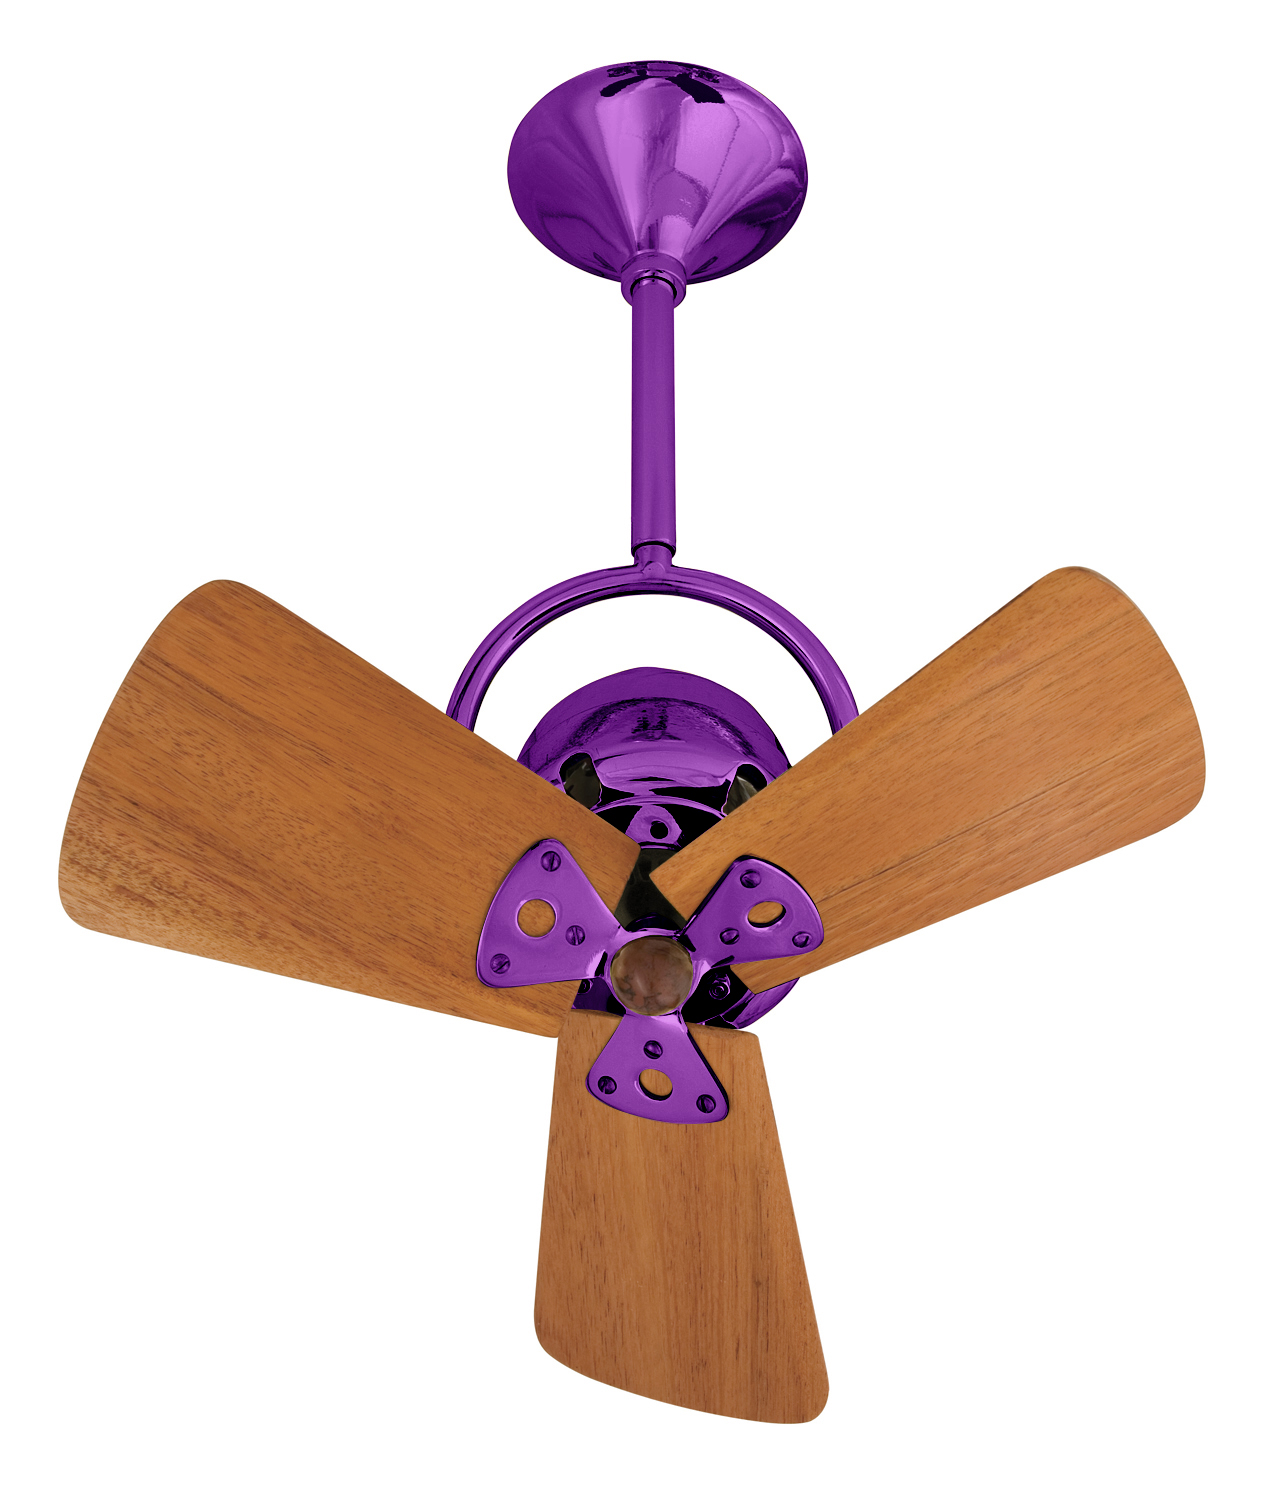 Bianca Direcional ceiling fan in Light Purple / Ametista with mahogany wood blades by Matthews Fan Company.